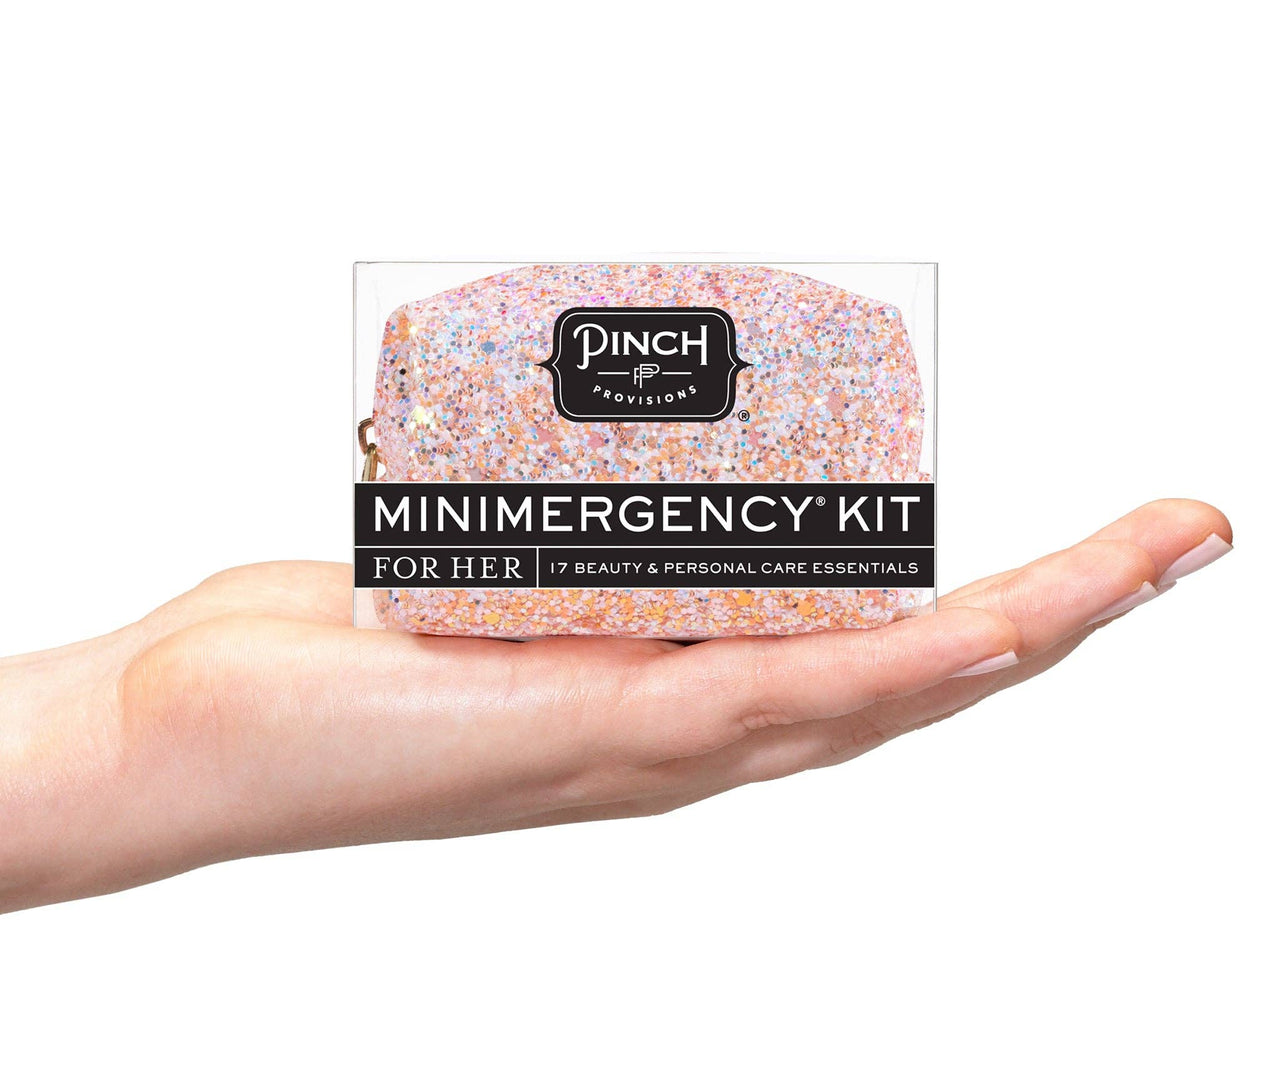 Rosé Glitter Minimergency Kit Pinch Provisions